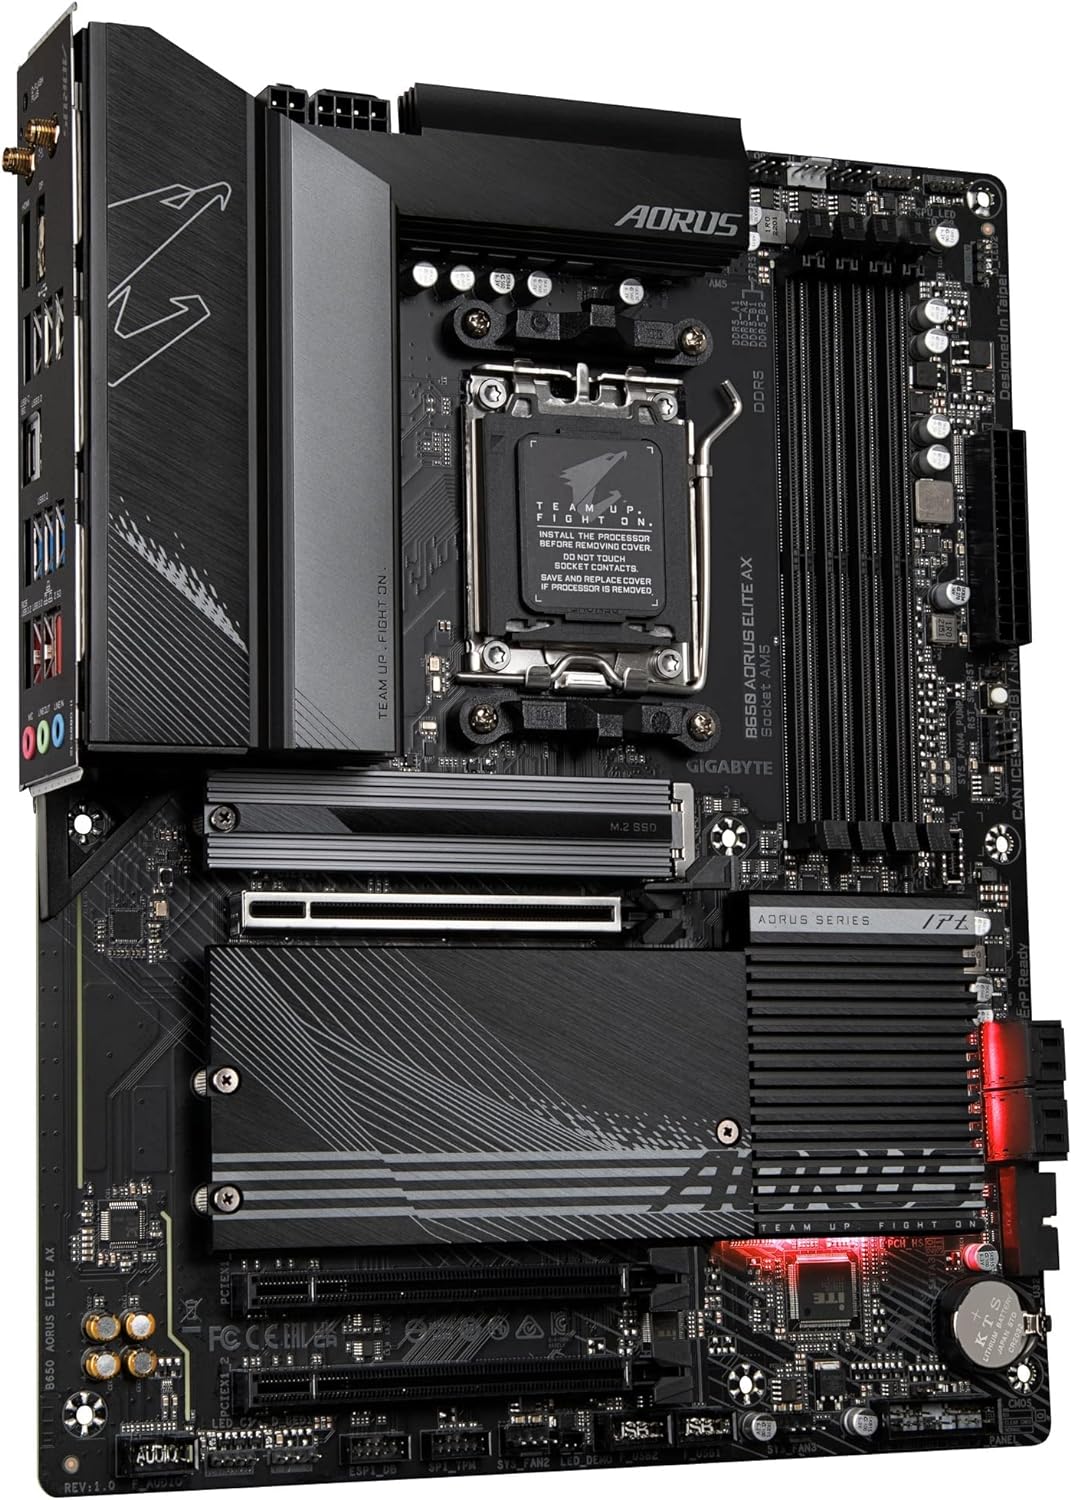 Intel Core i7-12700KF Gaming Desktop Processor 12 (8P+4E) Cores up to 5.0 GHz Unlocked LGA1700 600 Series Chipset 125W